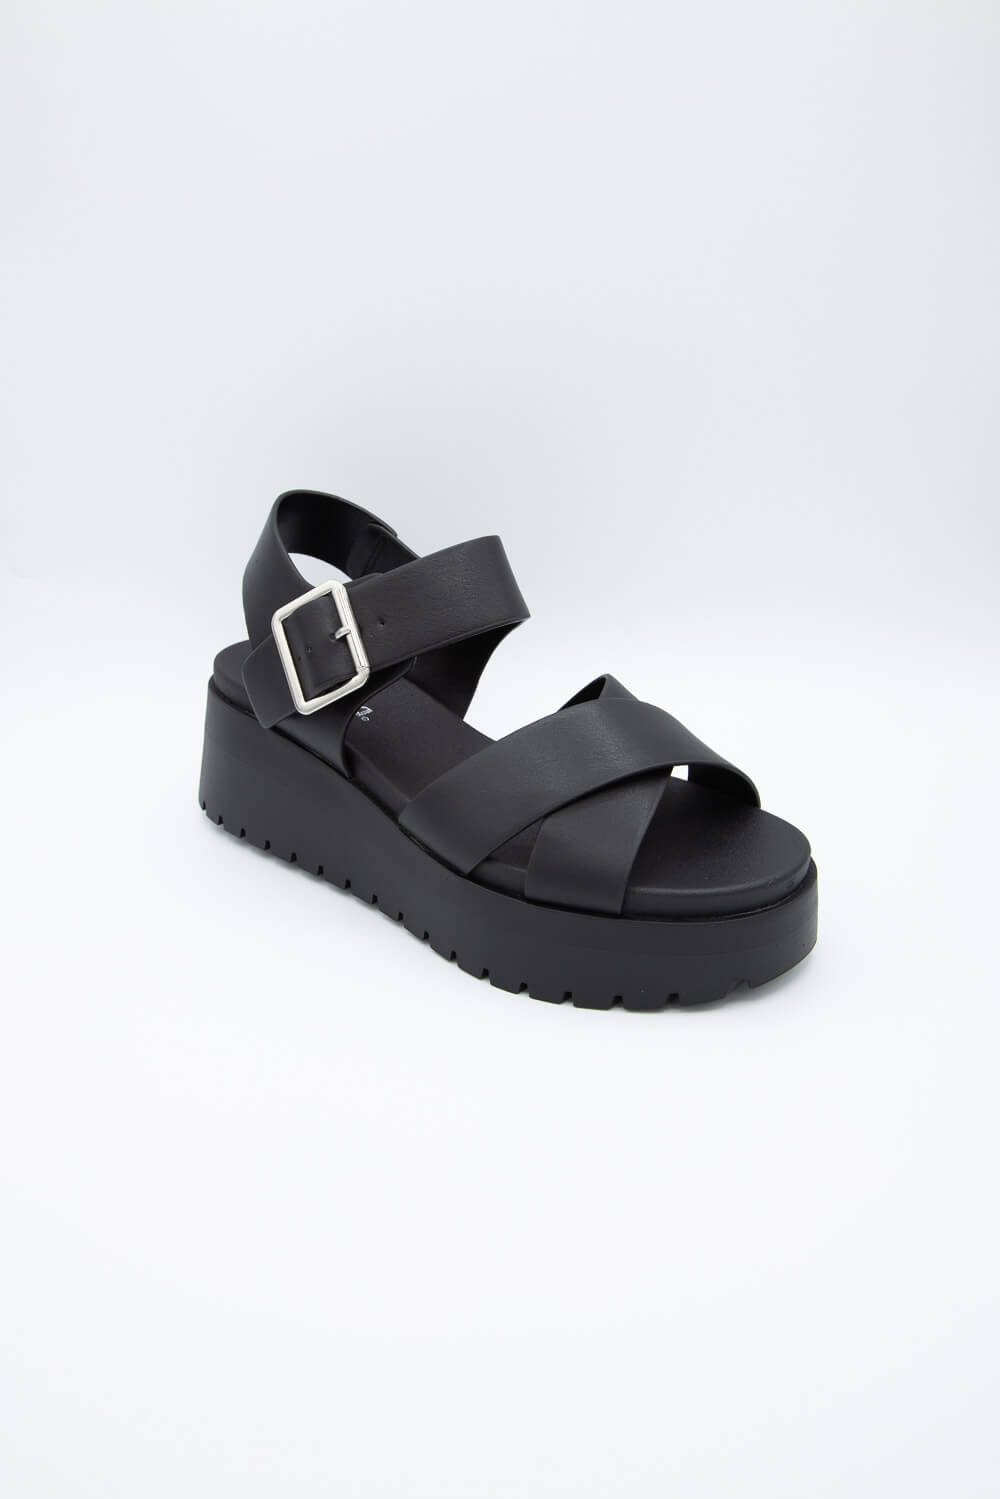 Modern Zade Black High Heel Sandals for Girls